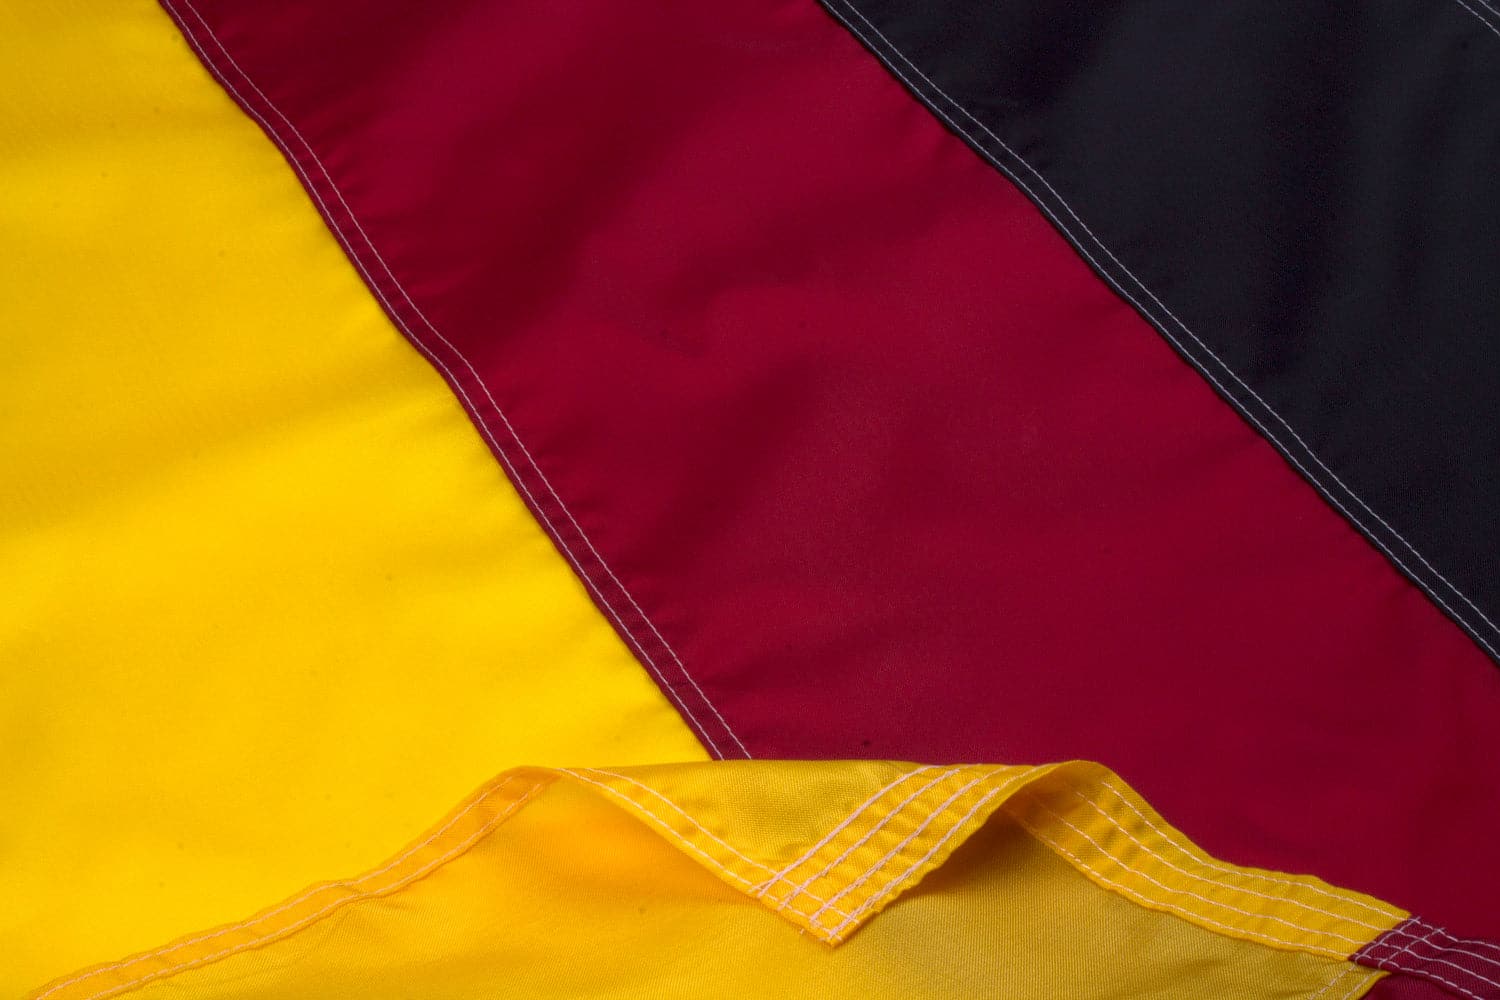  Germany Flag German Flag 3x5FT - Sewn Stripes